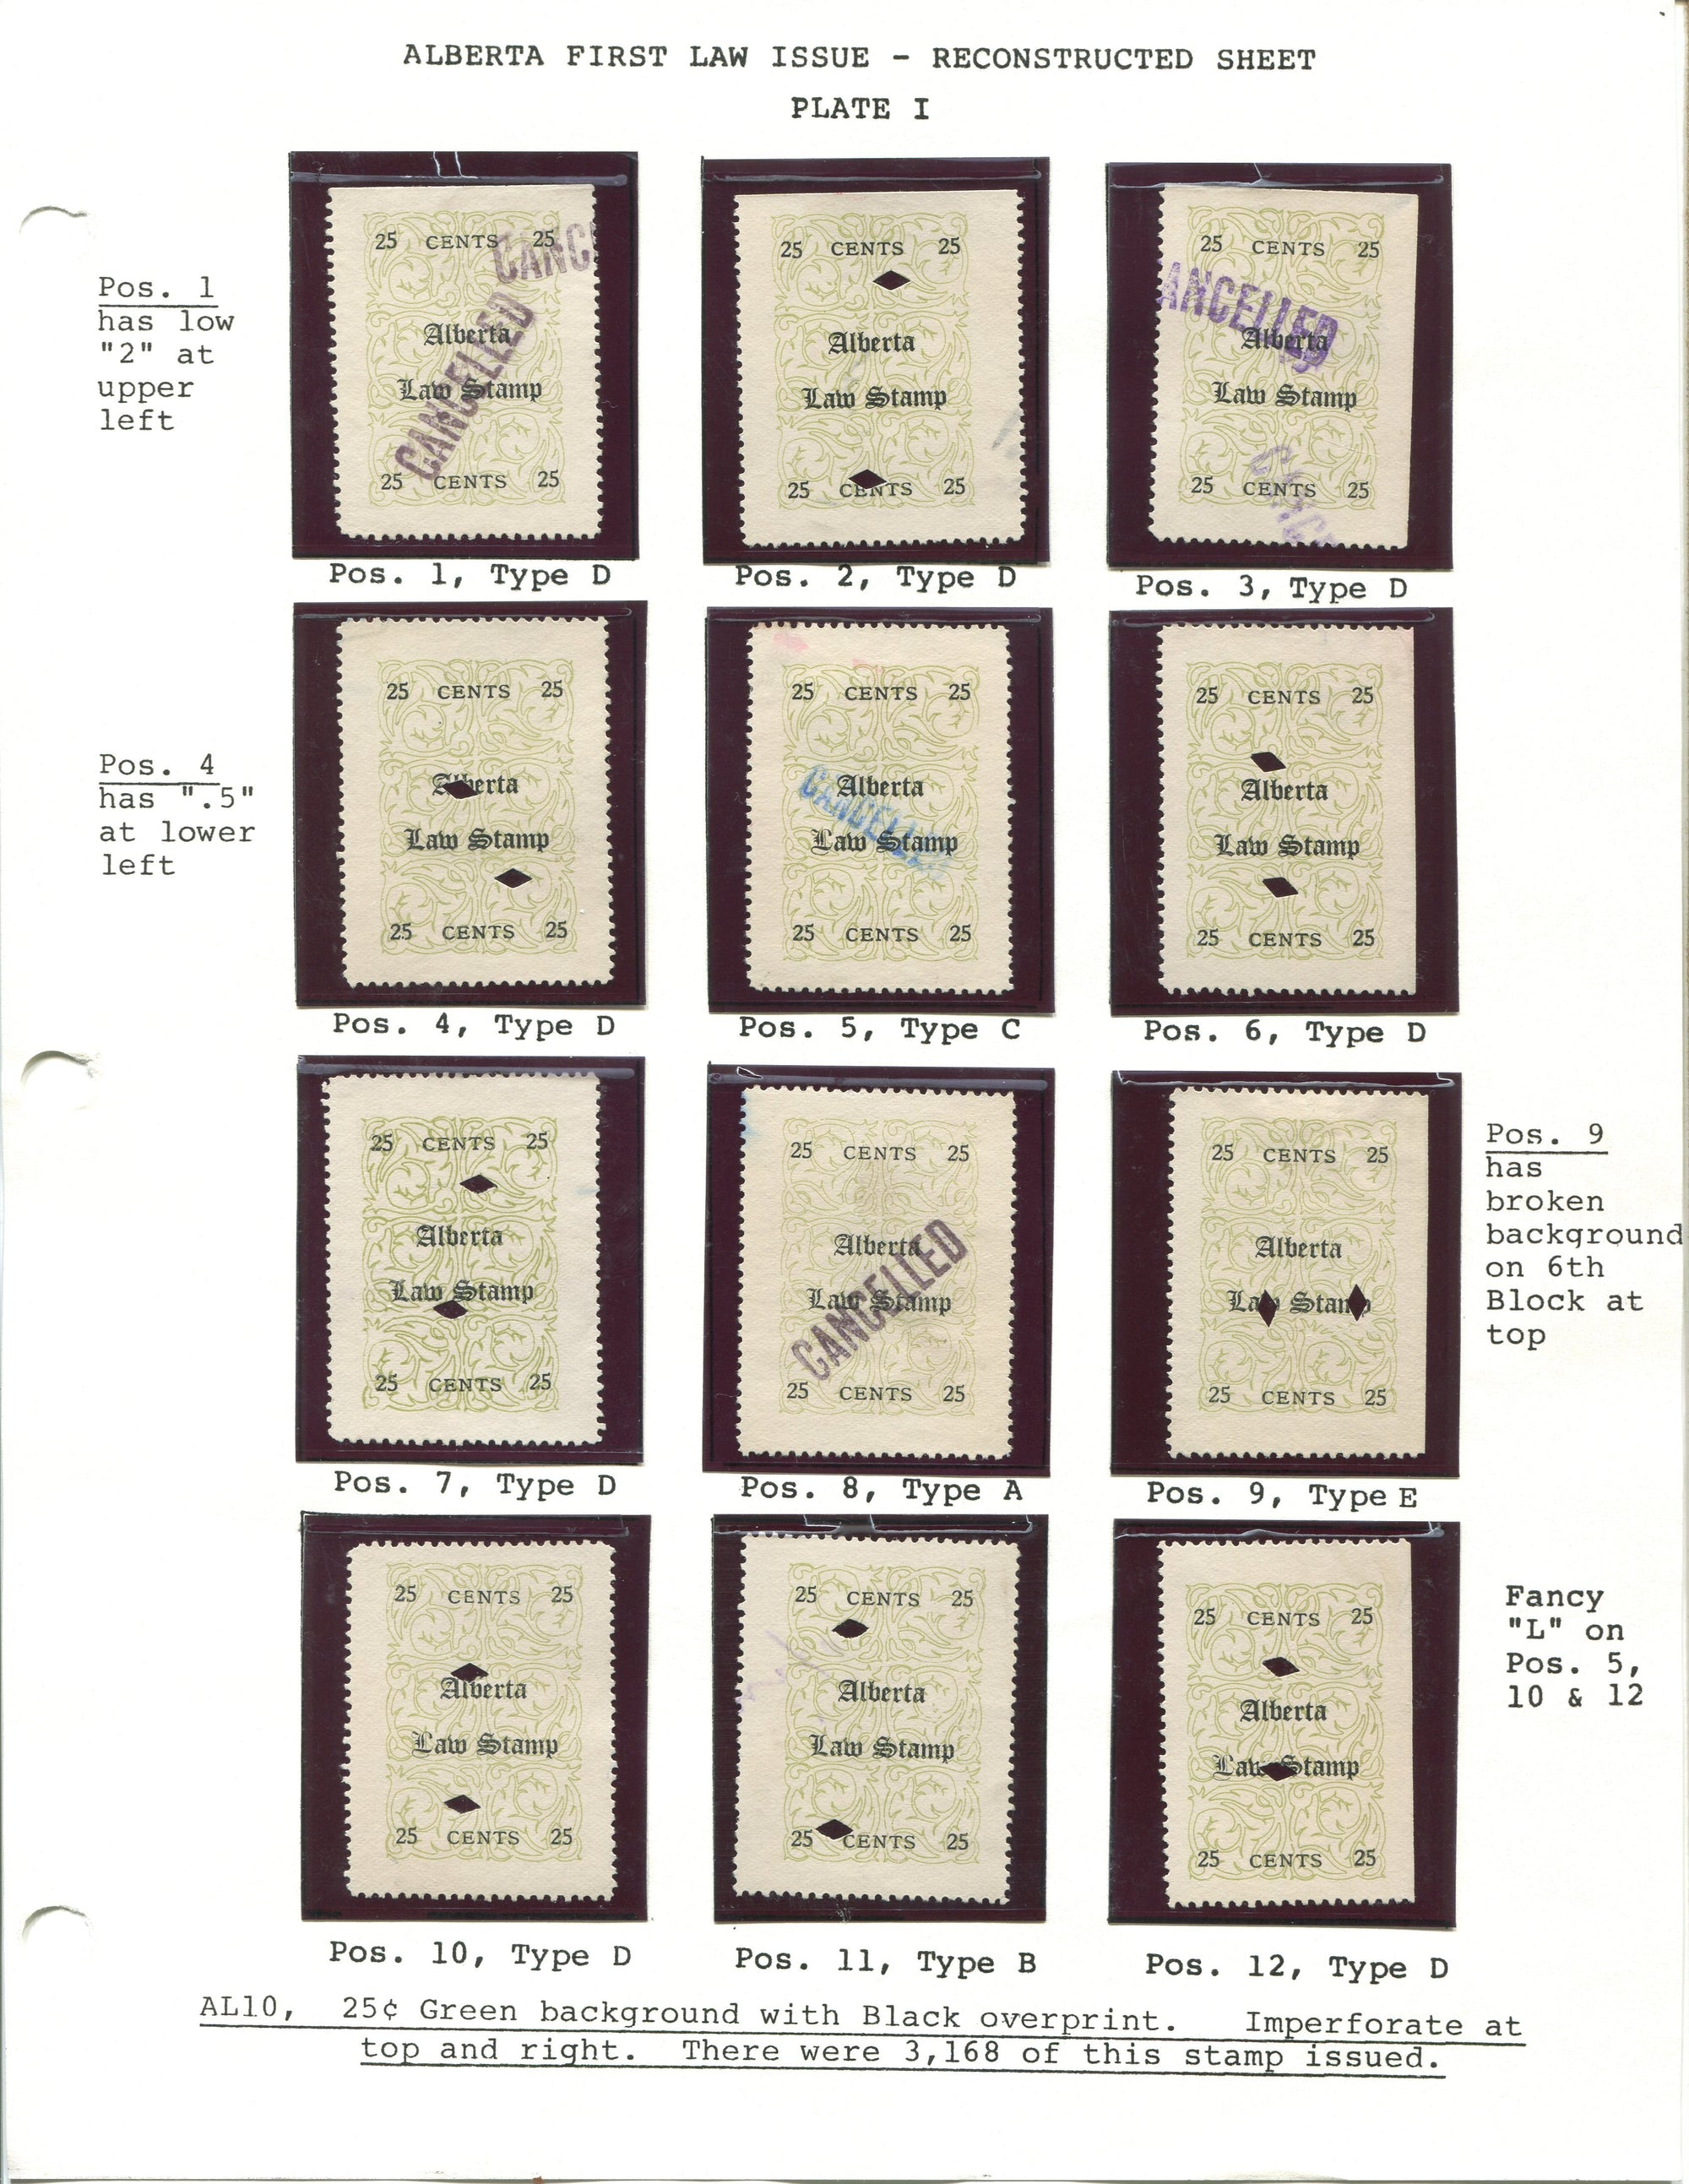 0010AL1709 - AL10 - Used Reconstructed Sheet - Deveney Stamps Ltd. Canadian Stamps